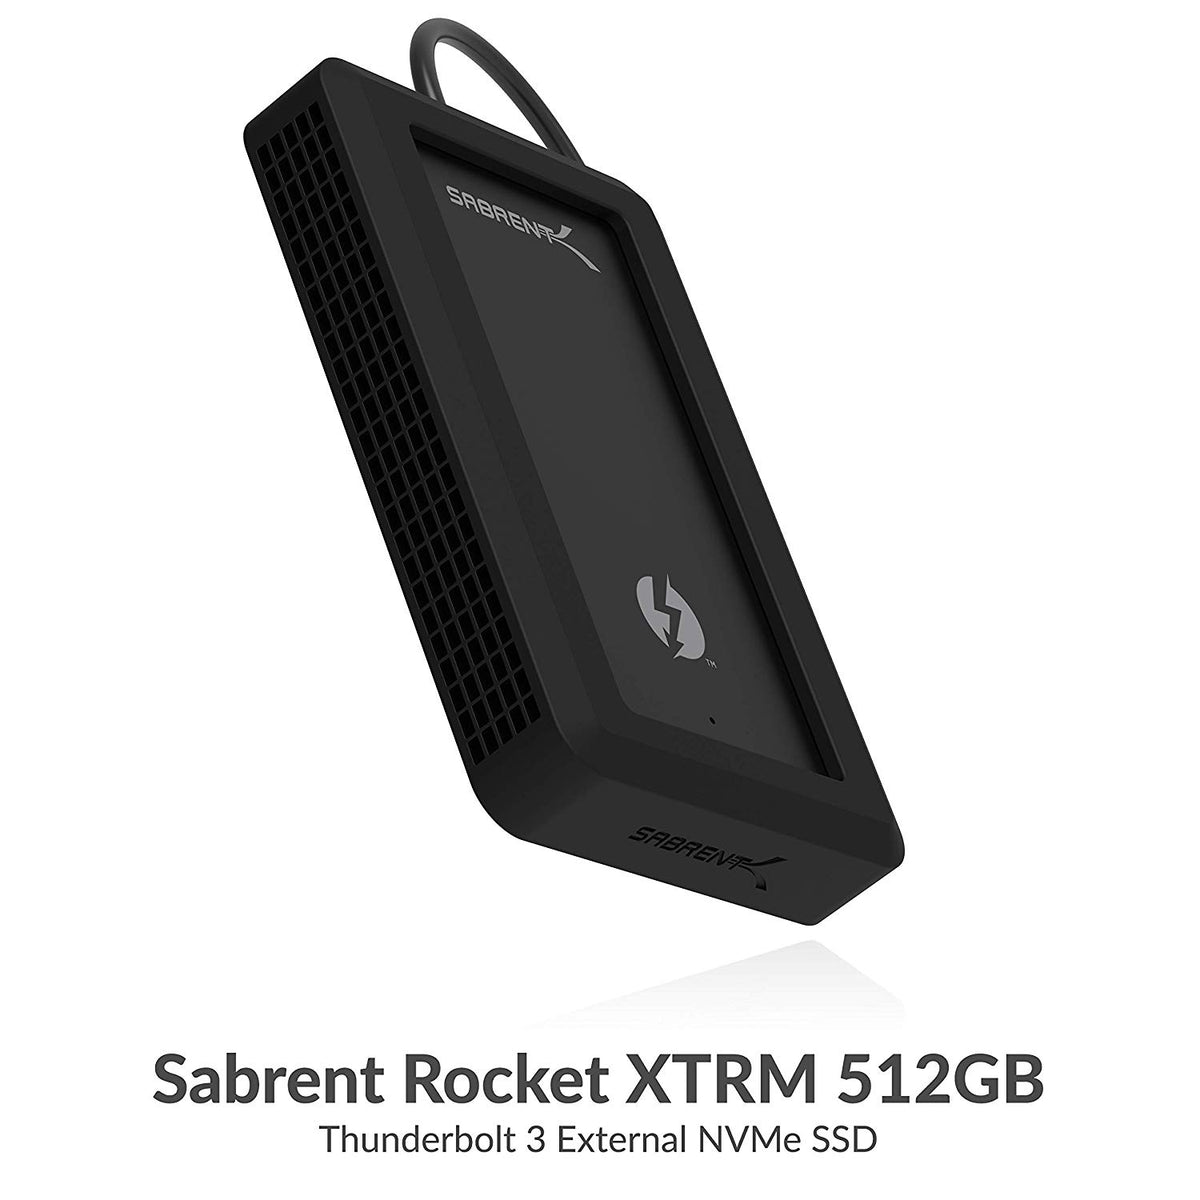 Sabrent Rocket XTRM 512GB Thunderbolt 3 External NVMe SSD with Bumper Guard (TH-P512)